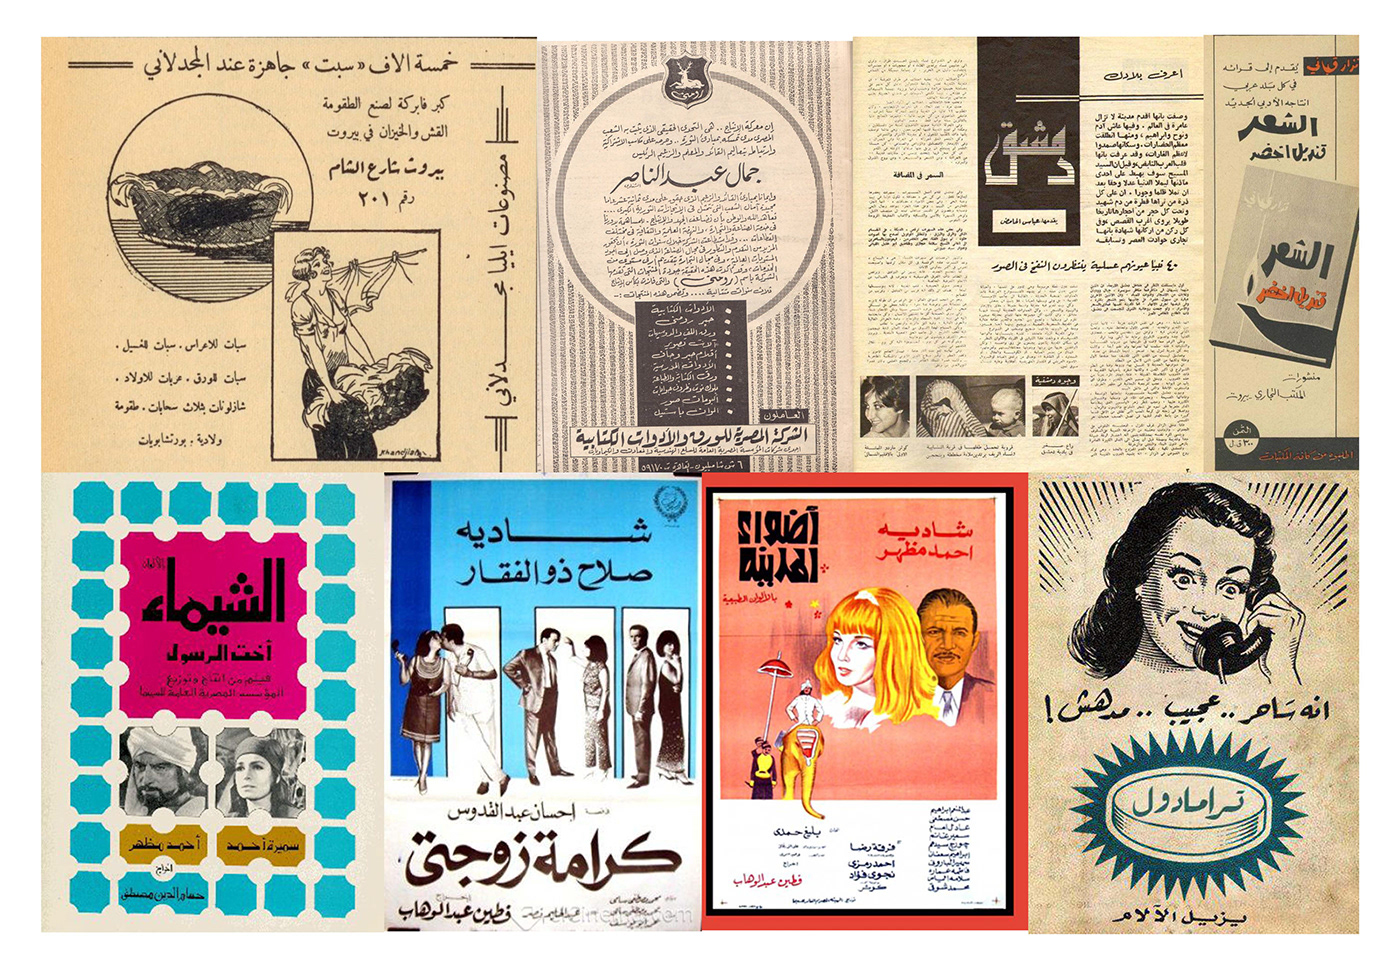 analyze News Paper advertise Data Entry minimalizm vintage Style poster design egyptian Cinema